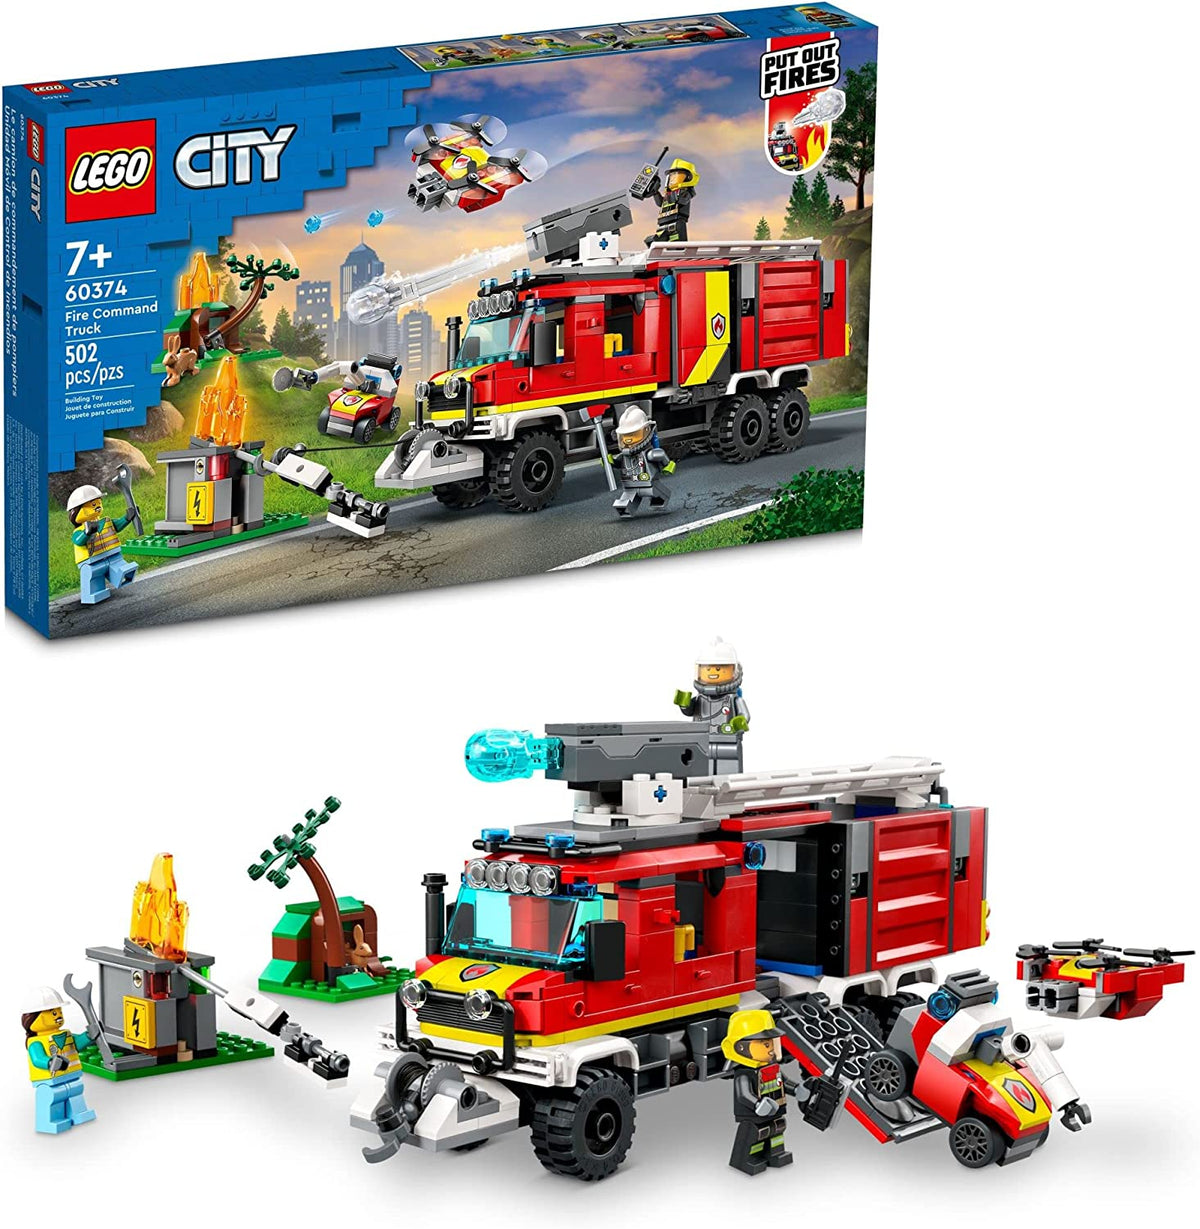 CITY 60374: Fire Command Truck